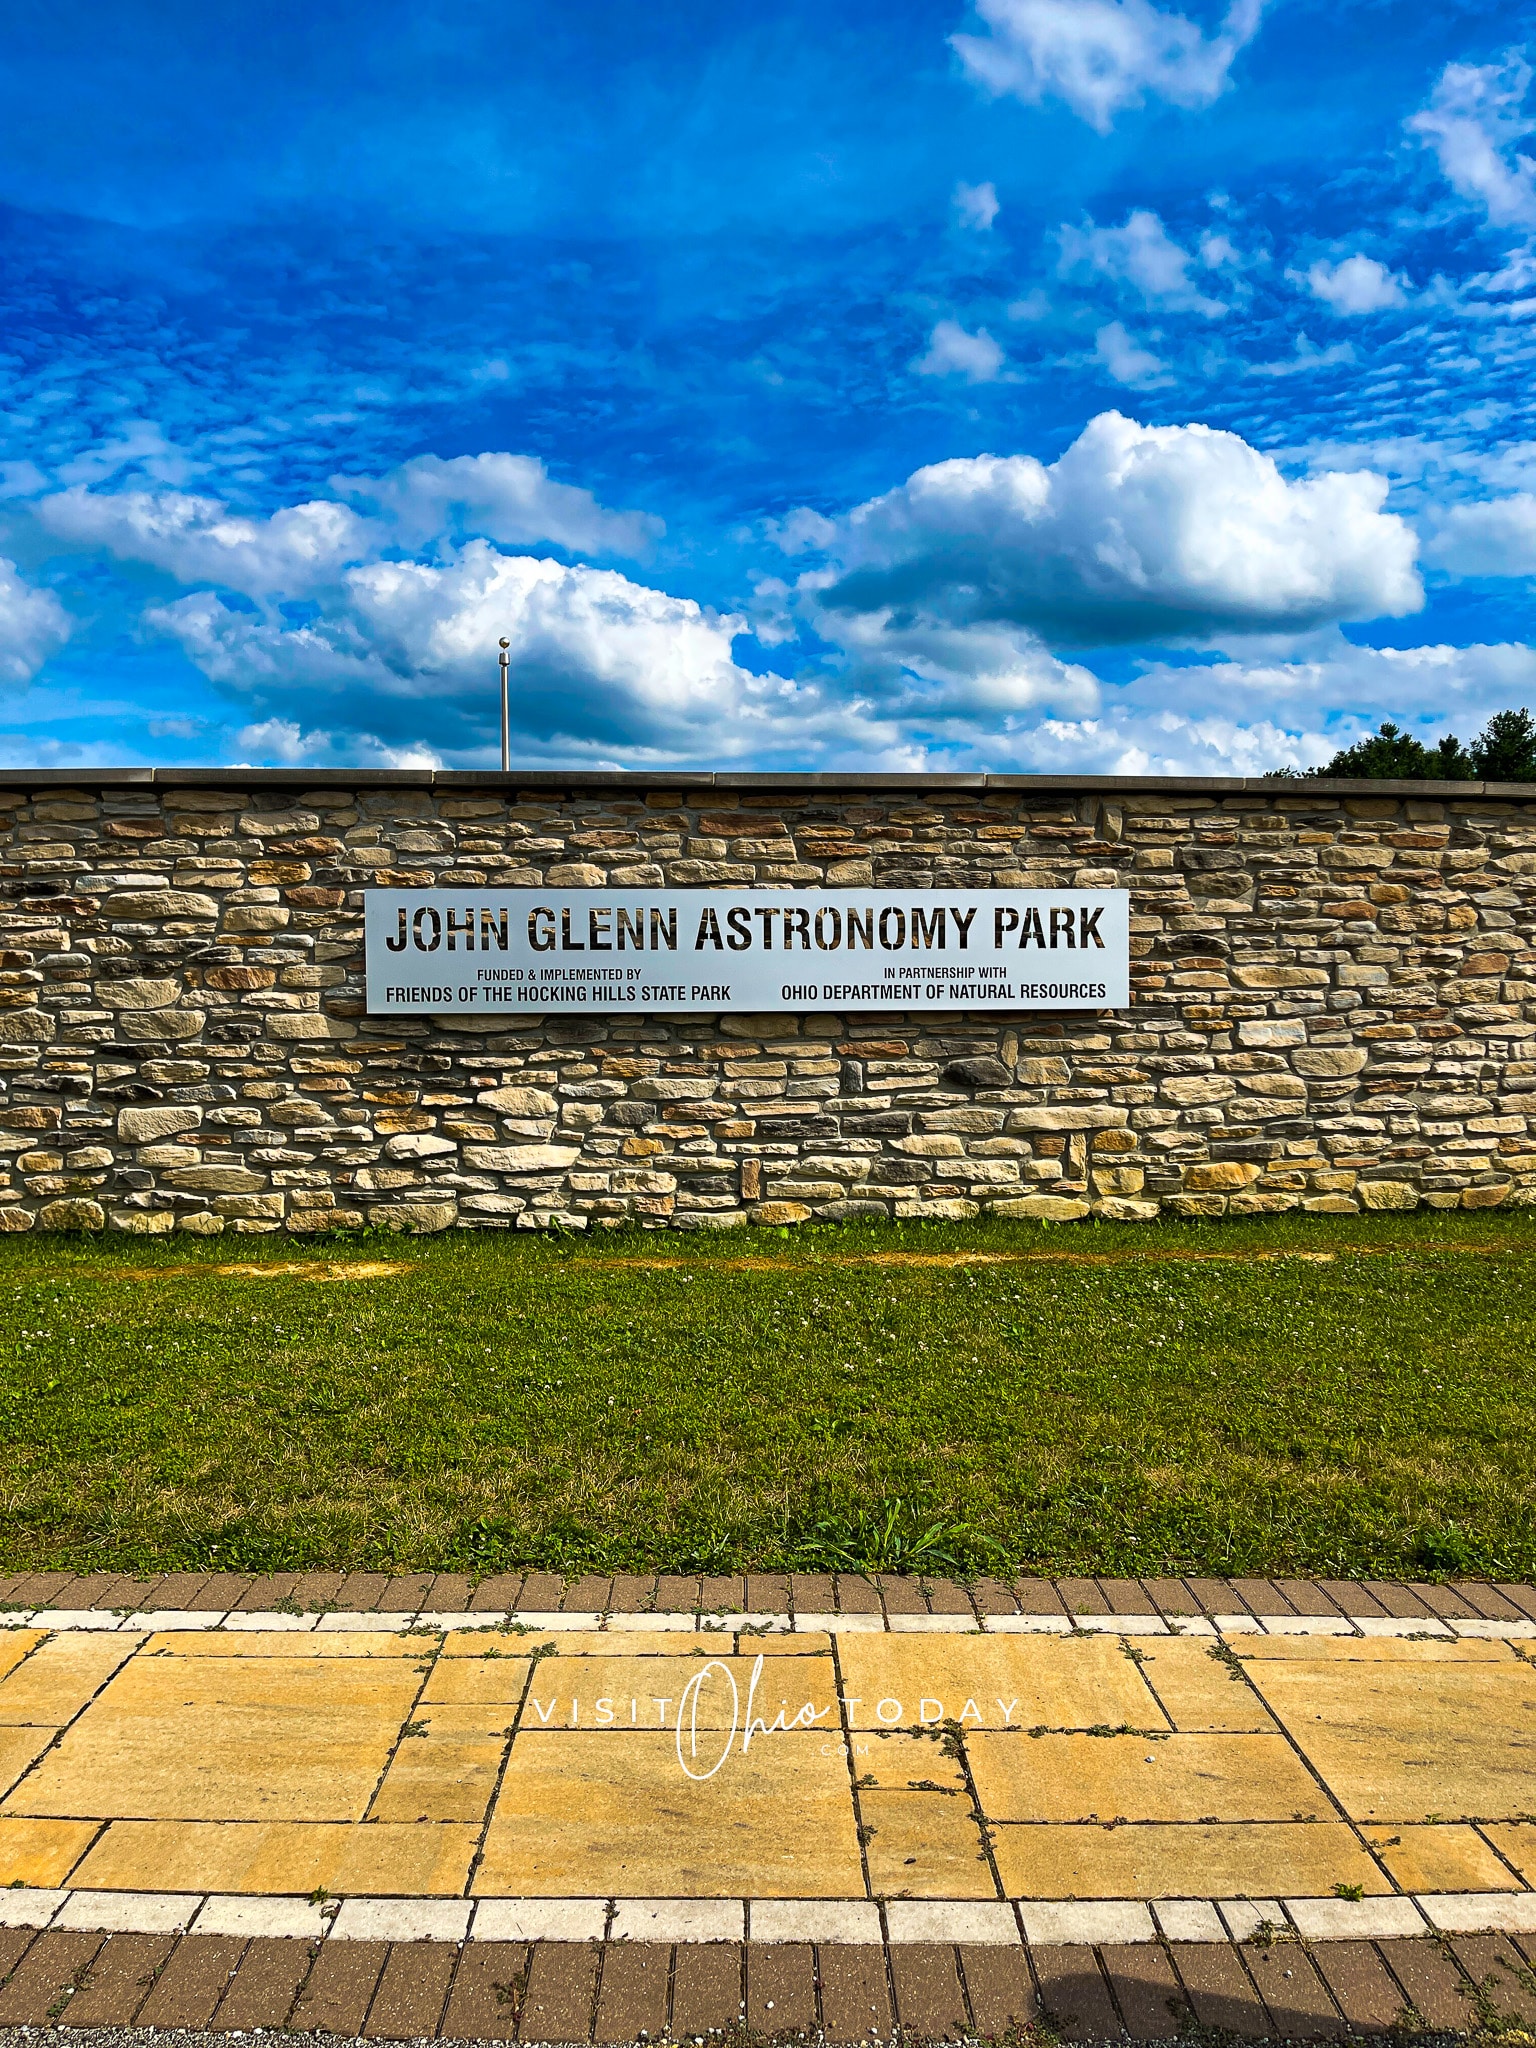 A photo of the John Glenn Astronomy Park plaque on a brick wall